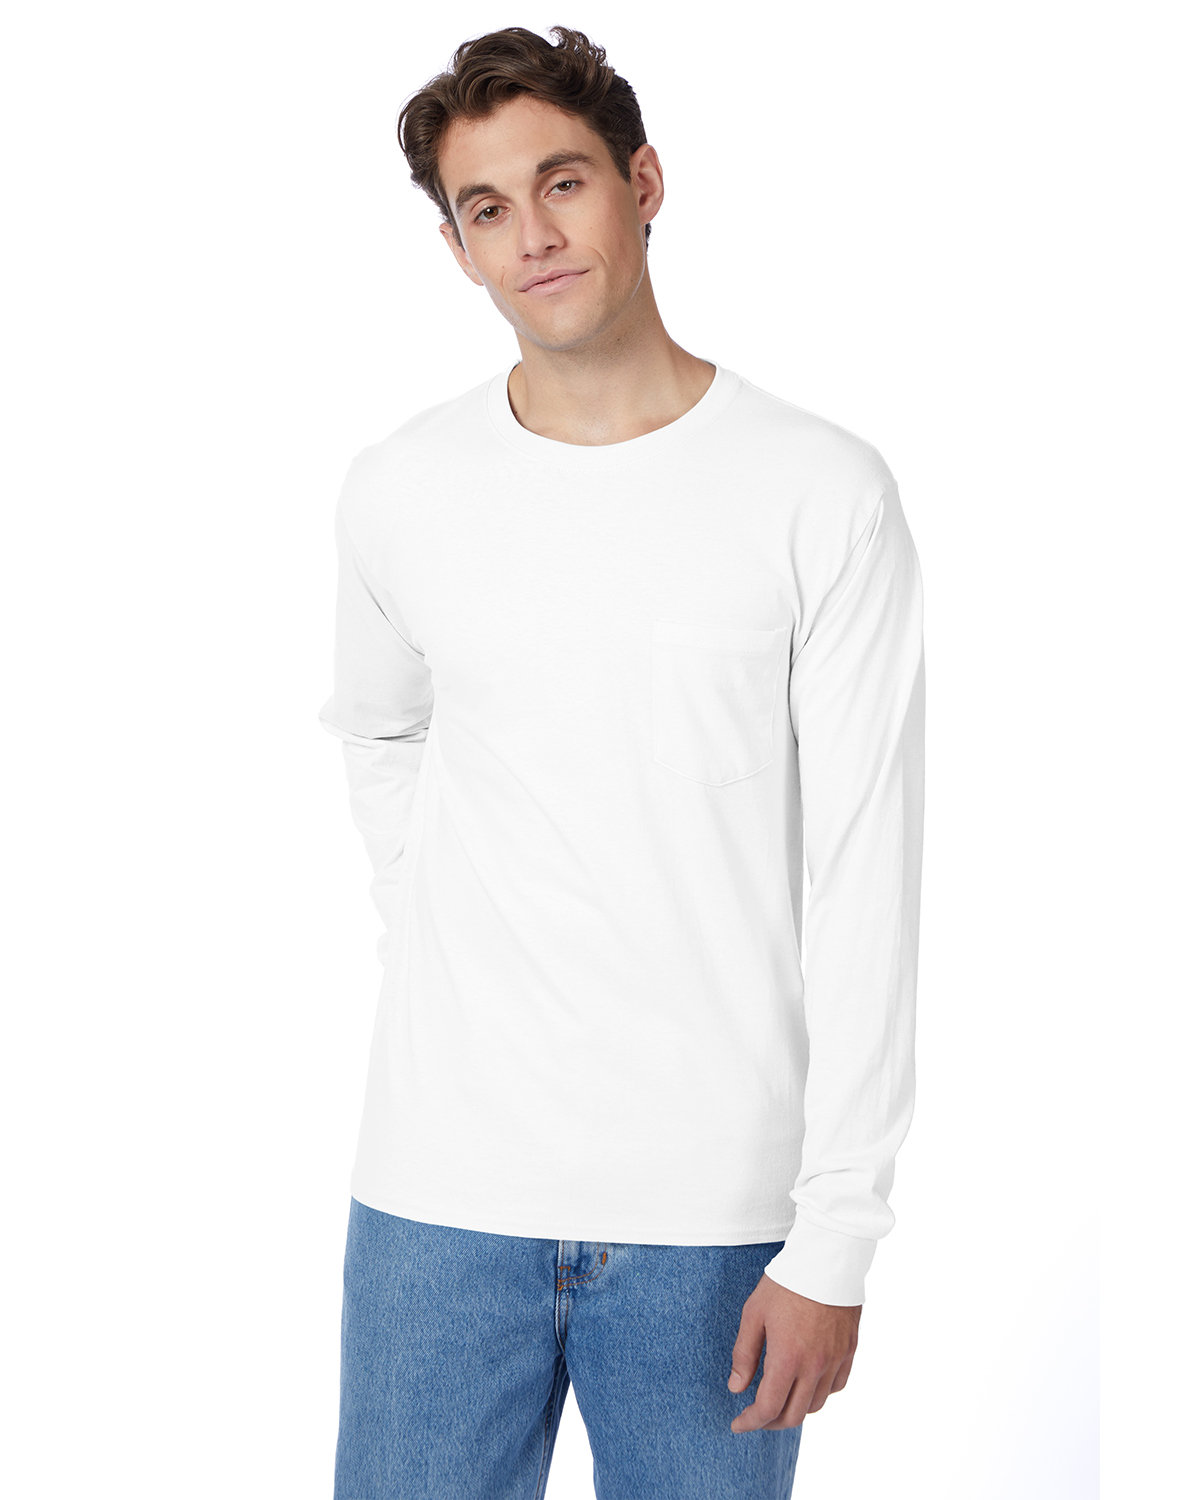 Hanes Men's Authentic-T Long-Sleeve Pocket T-Shirt WHITE 